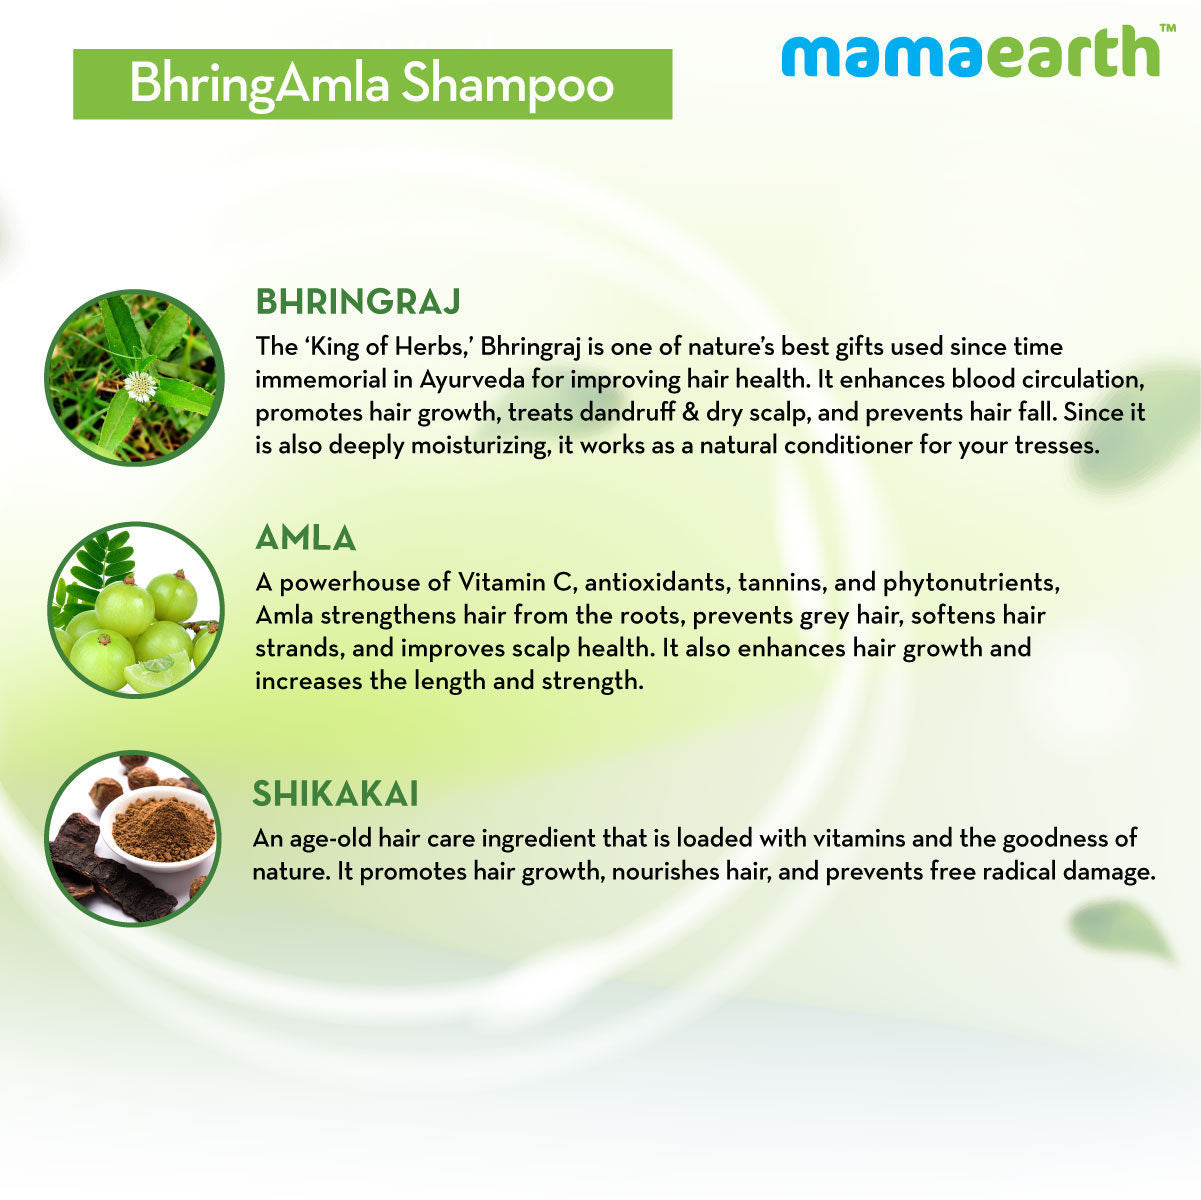 Mamaearth BhringAmla Shampoo and Conditioner Combo (250 ml each)